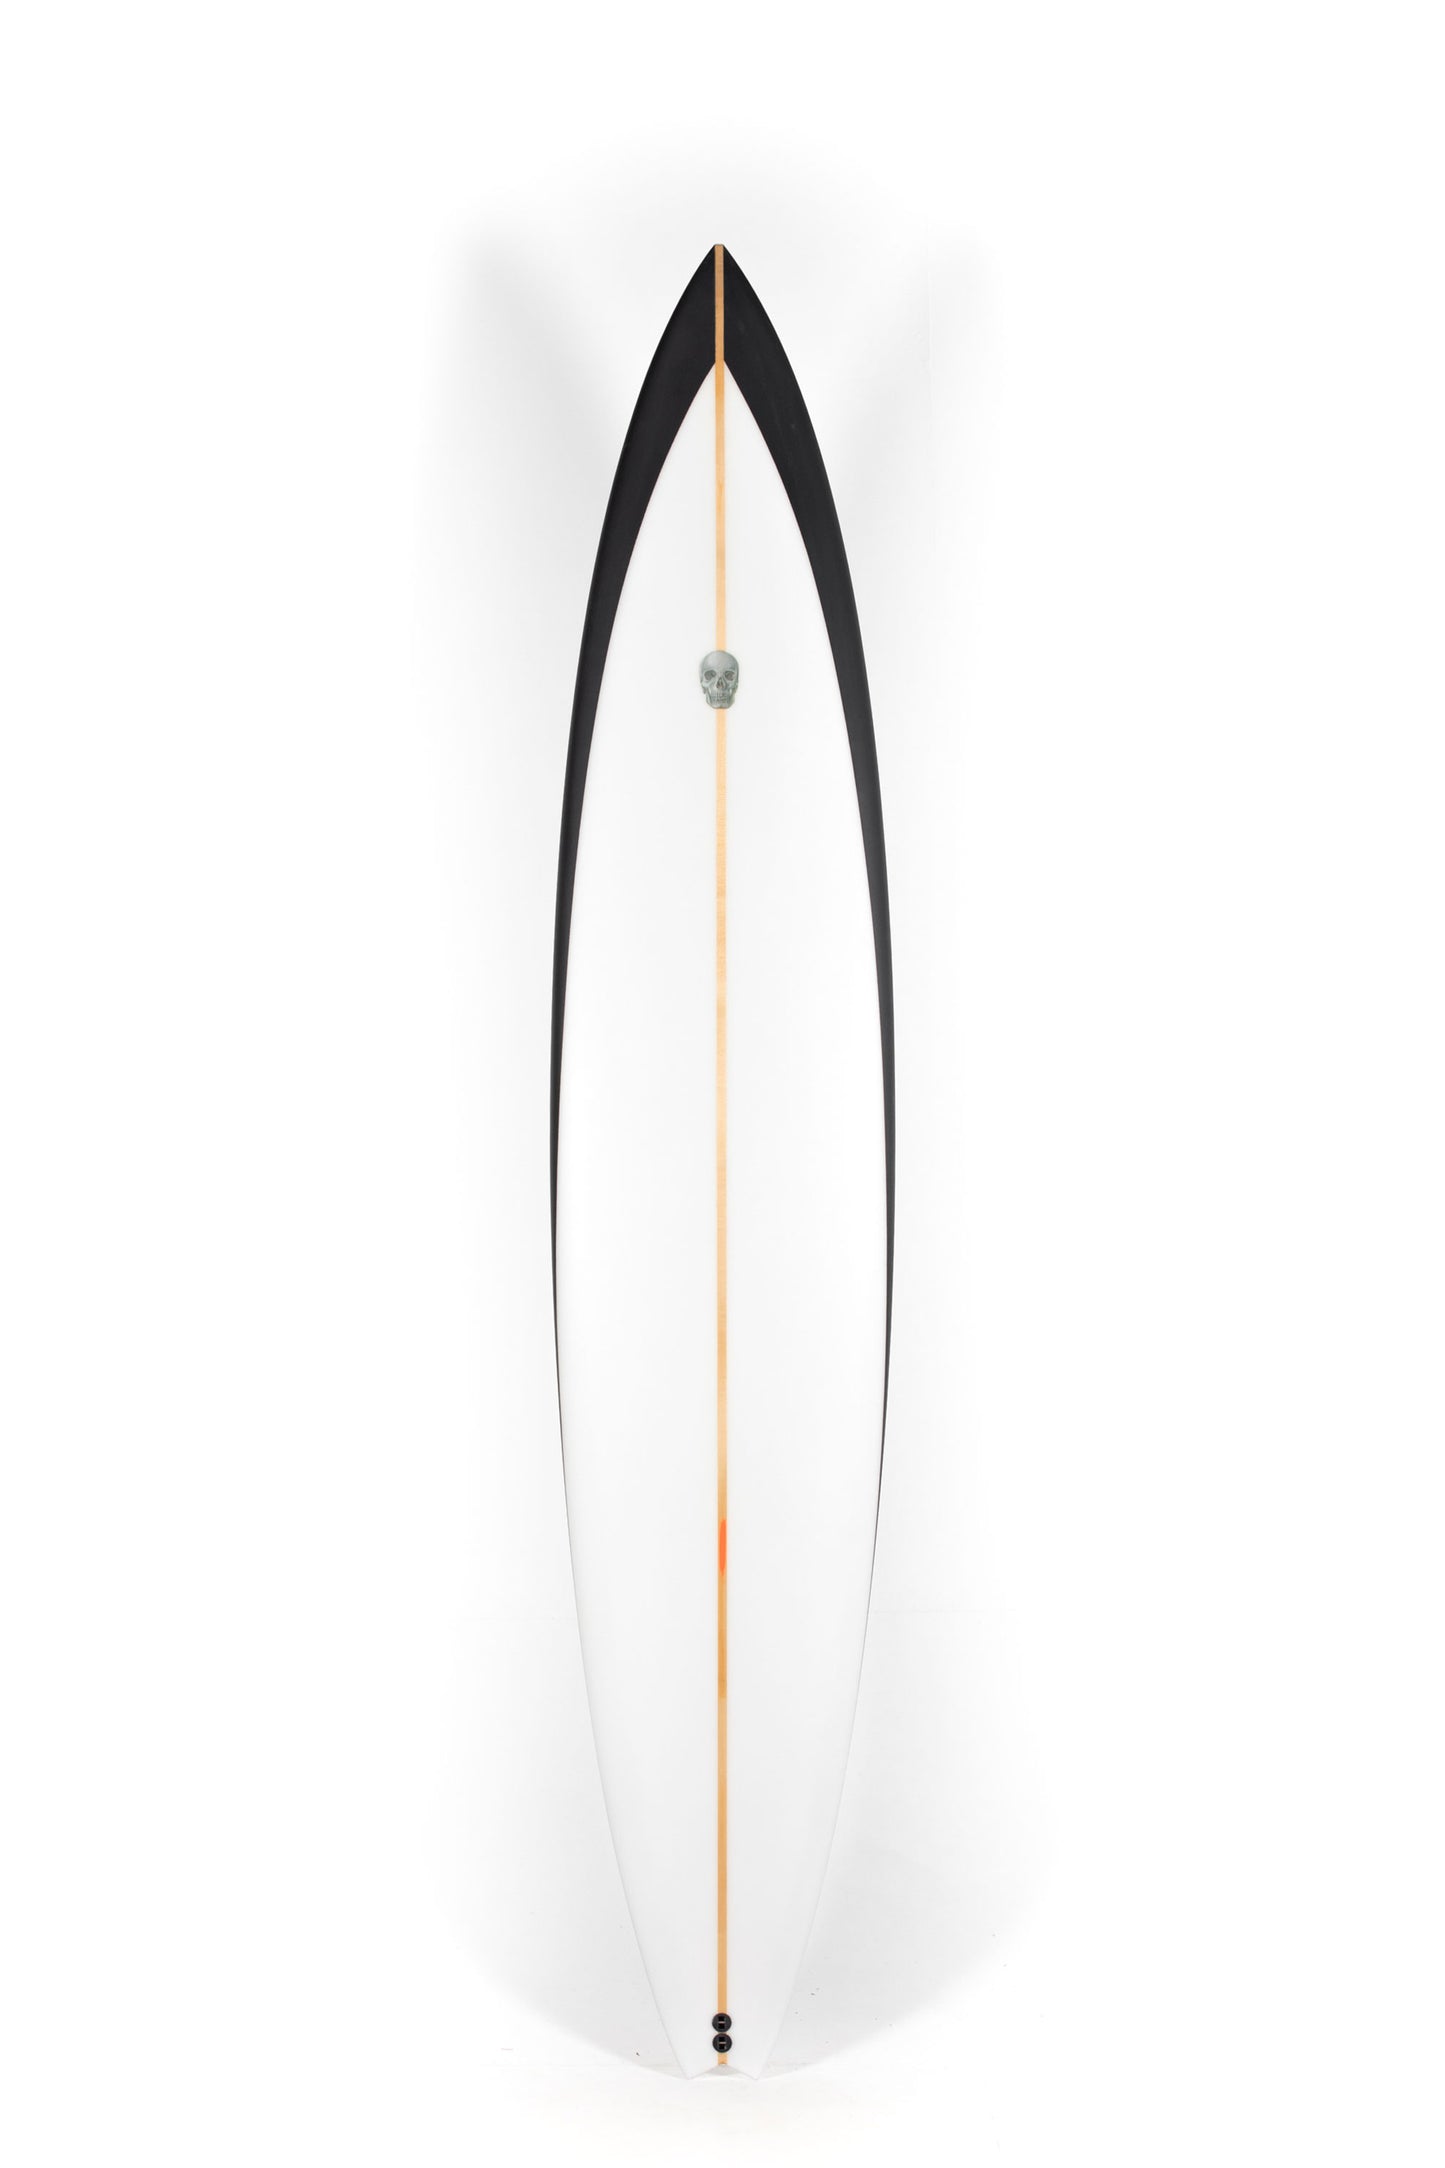 Christenson Surfboards - SICARIO - 8'6